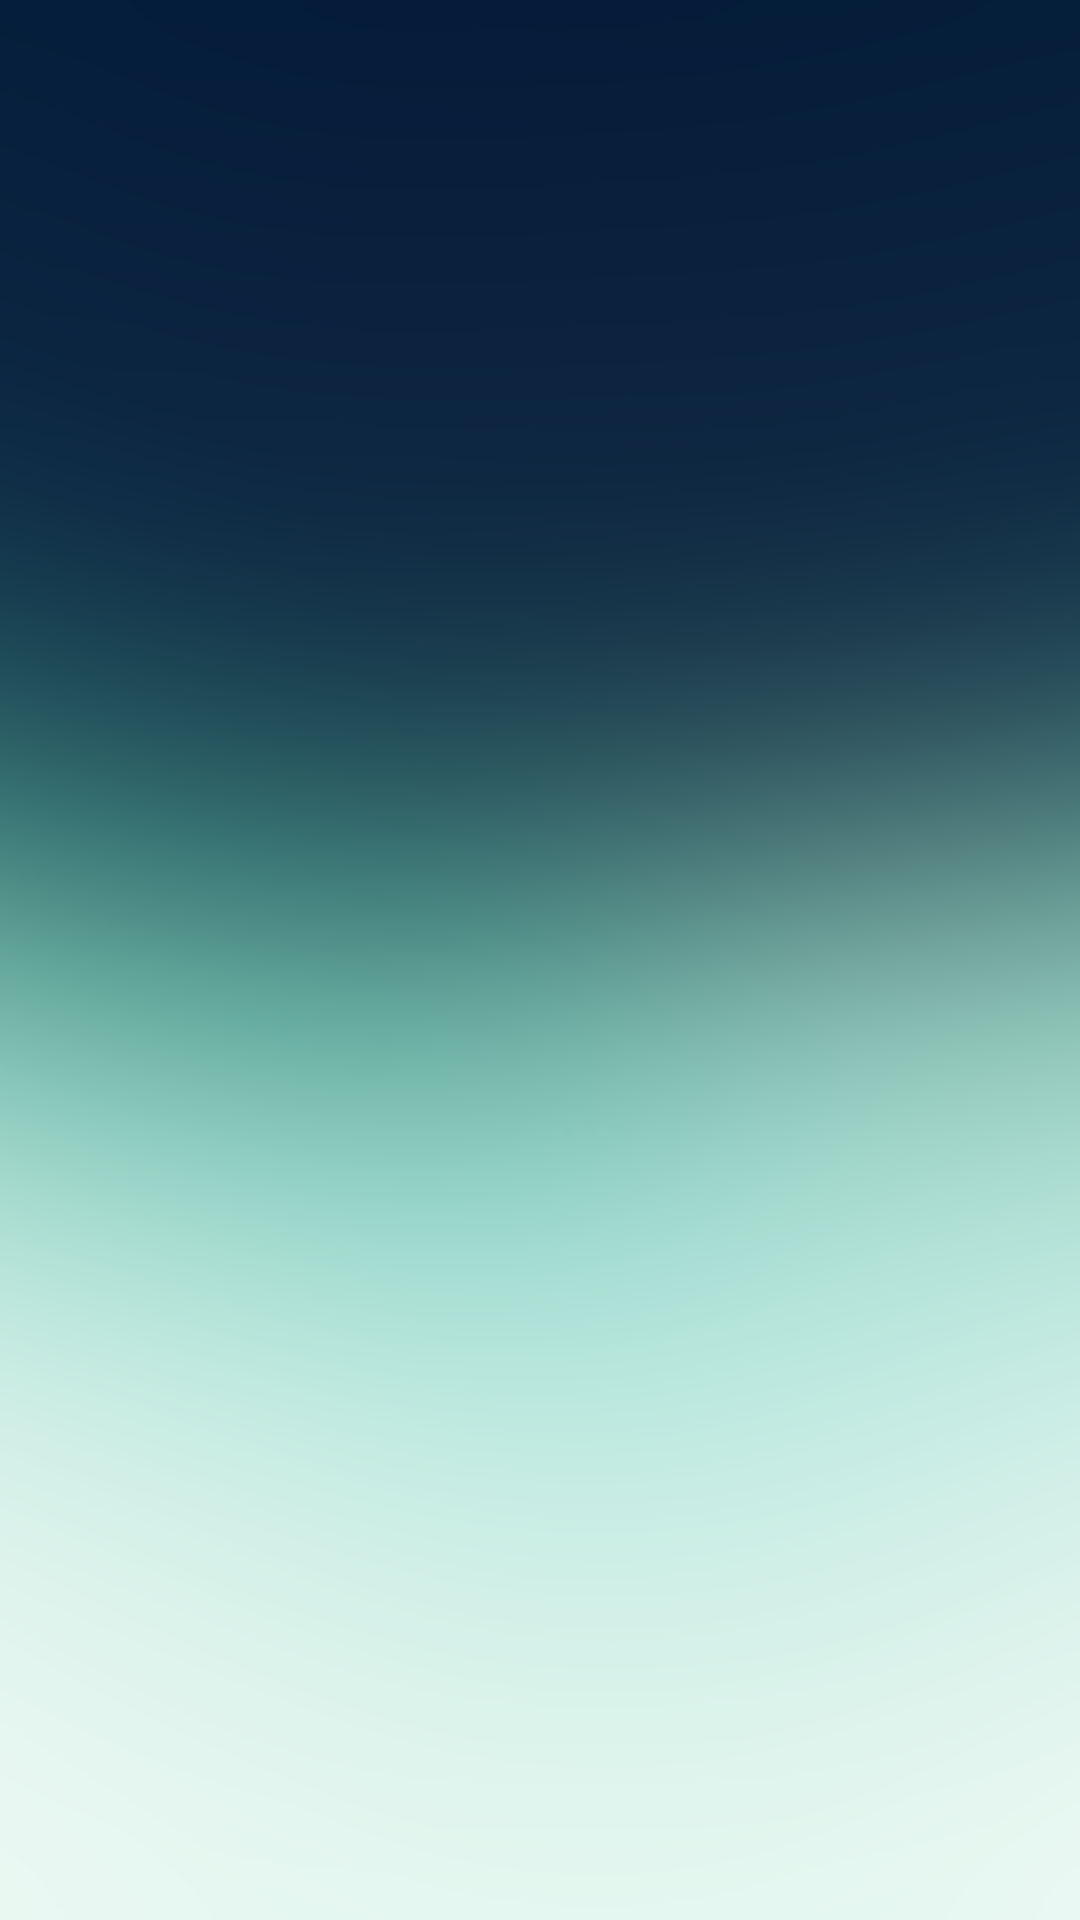 Green Blue Gradient Android Wallpaper Data-src - Linear Green Blue Gradient  - 1080x1920 Wallpaper 